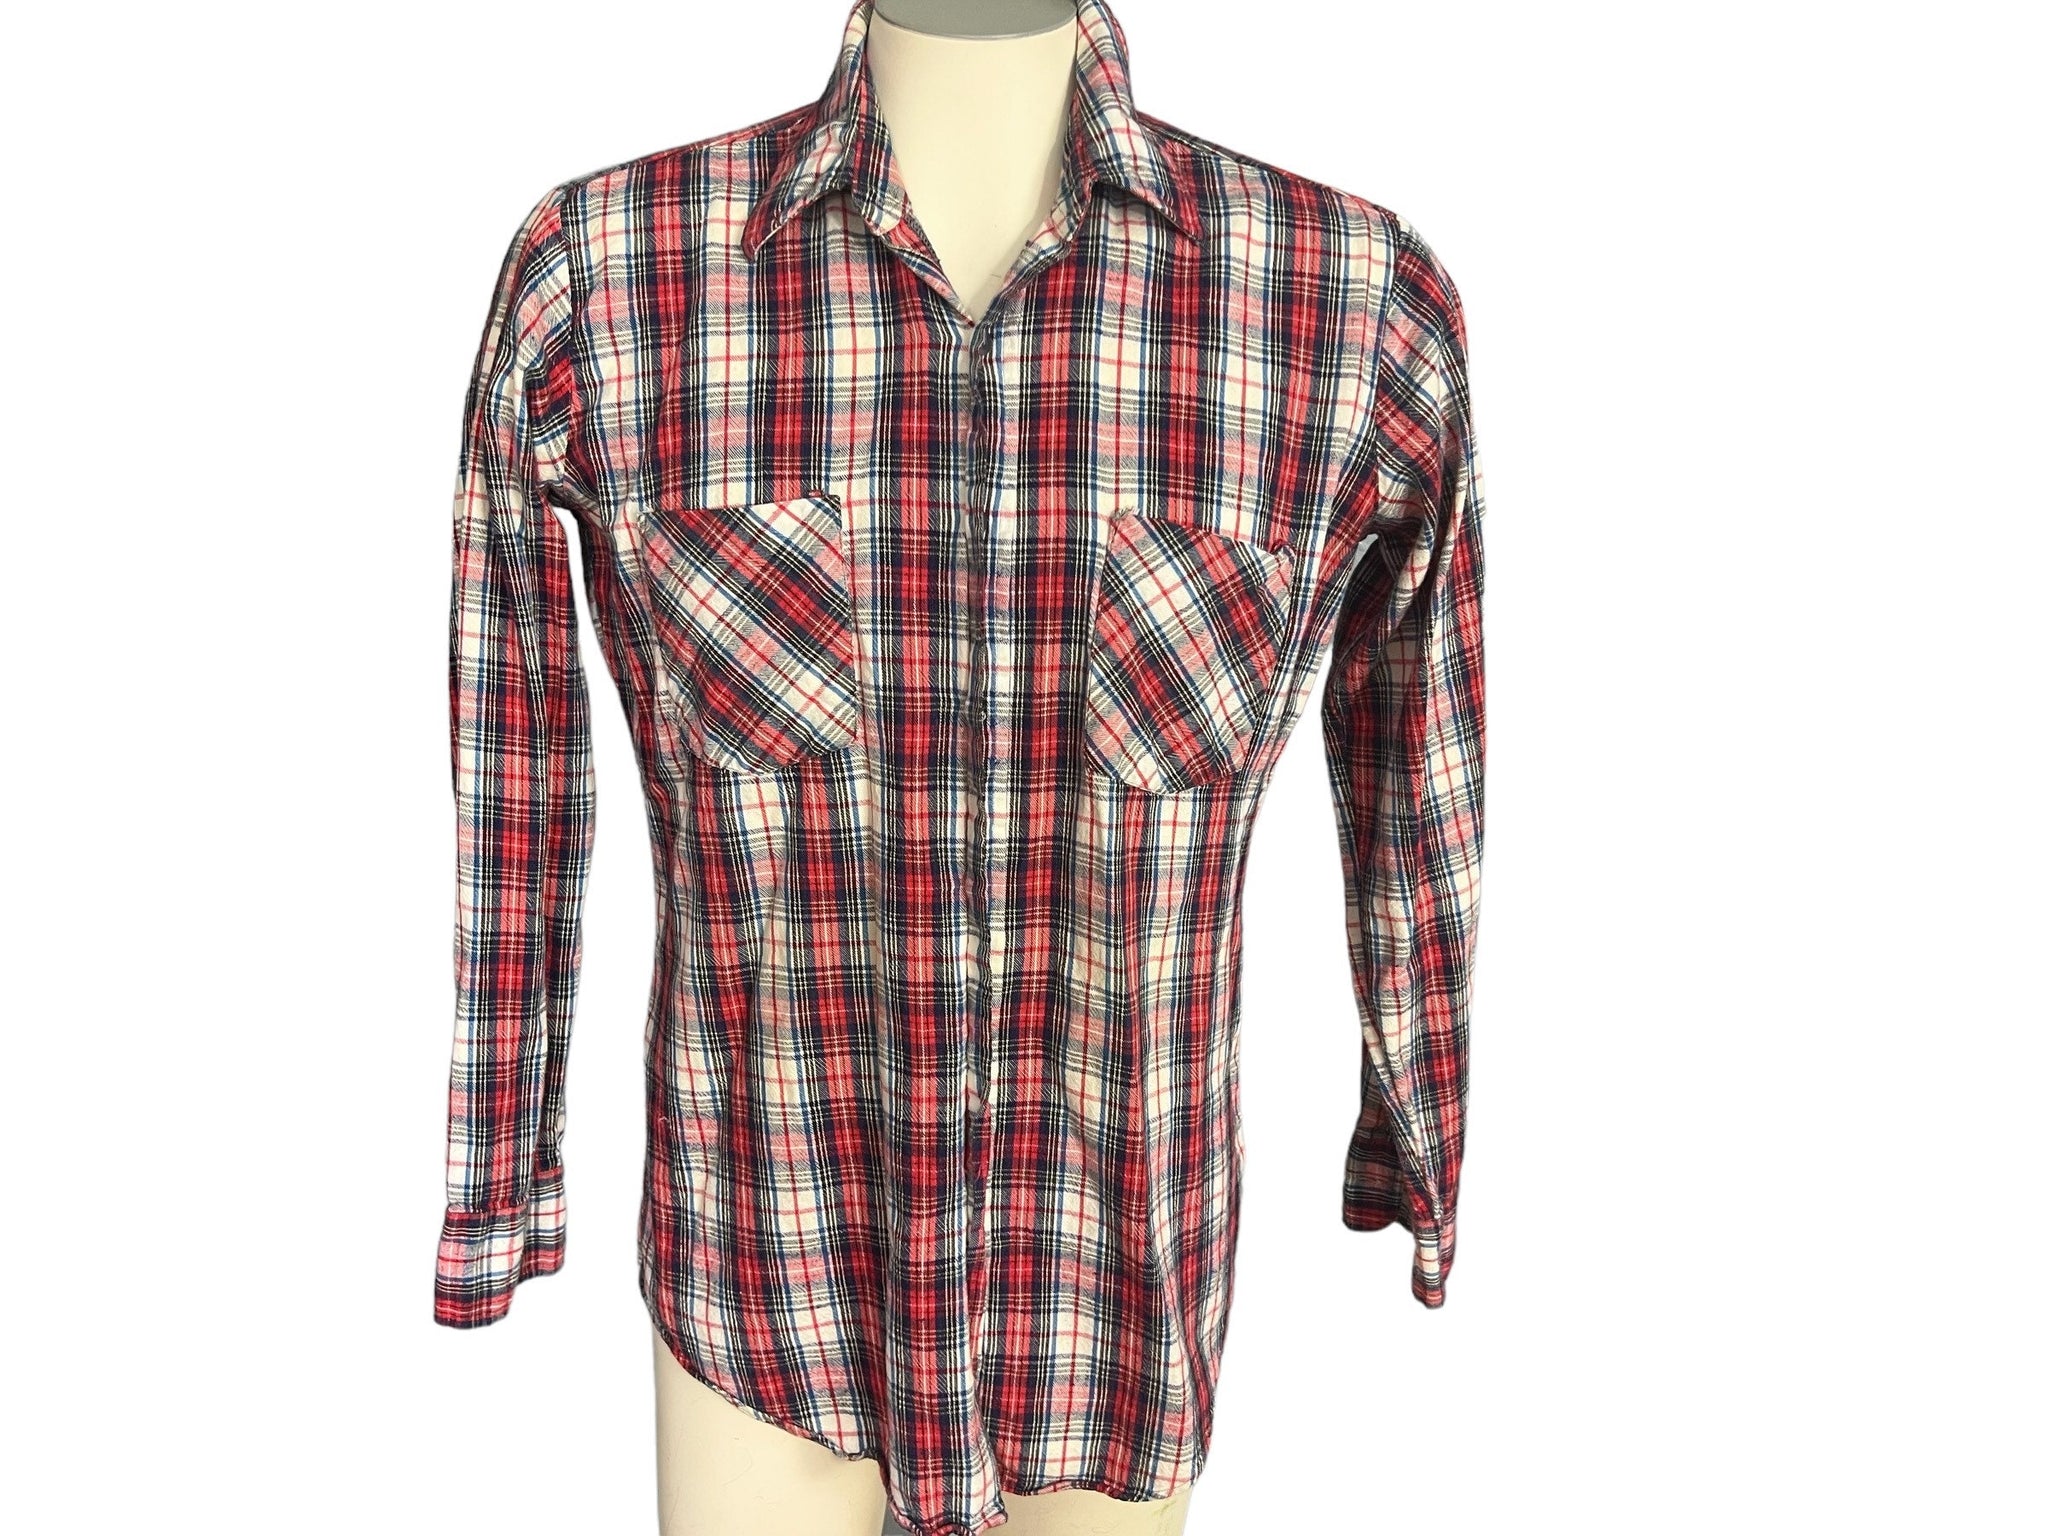 Vintage 80's red plaid button up shirt M